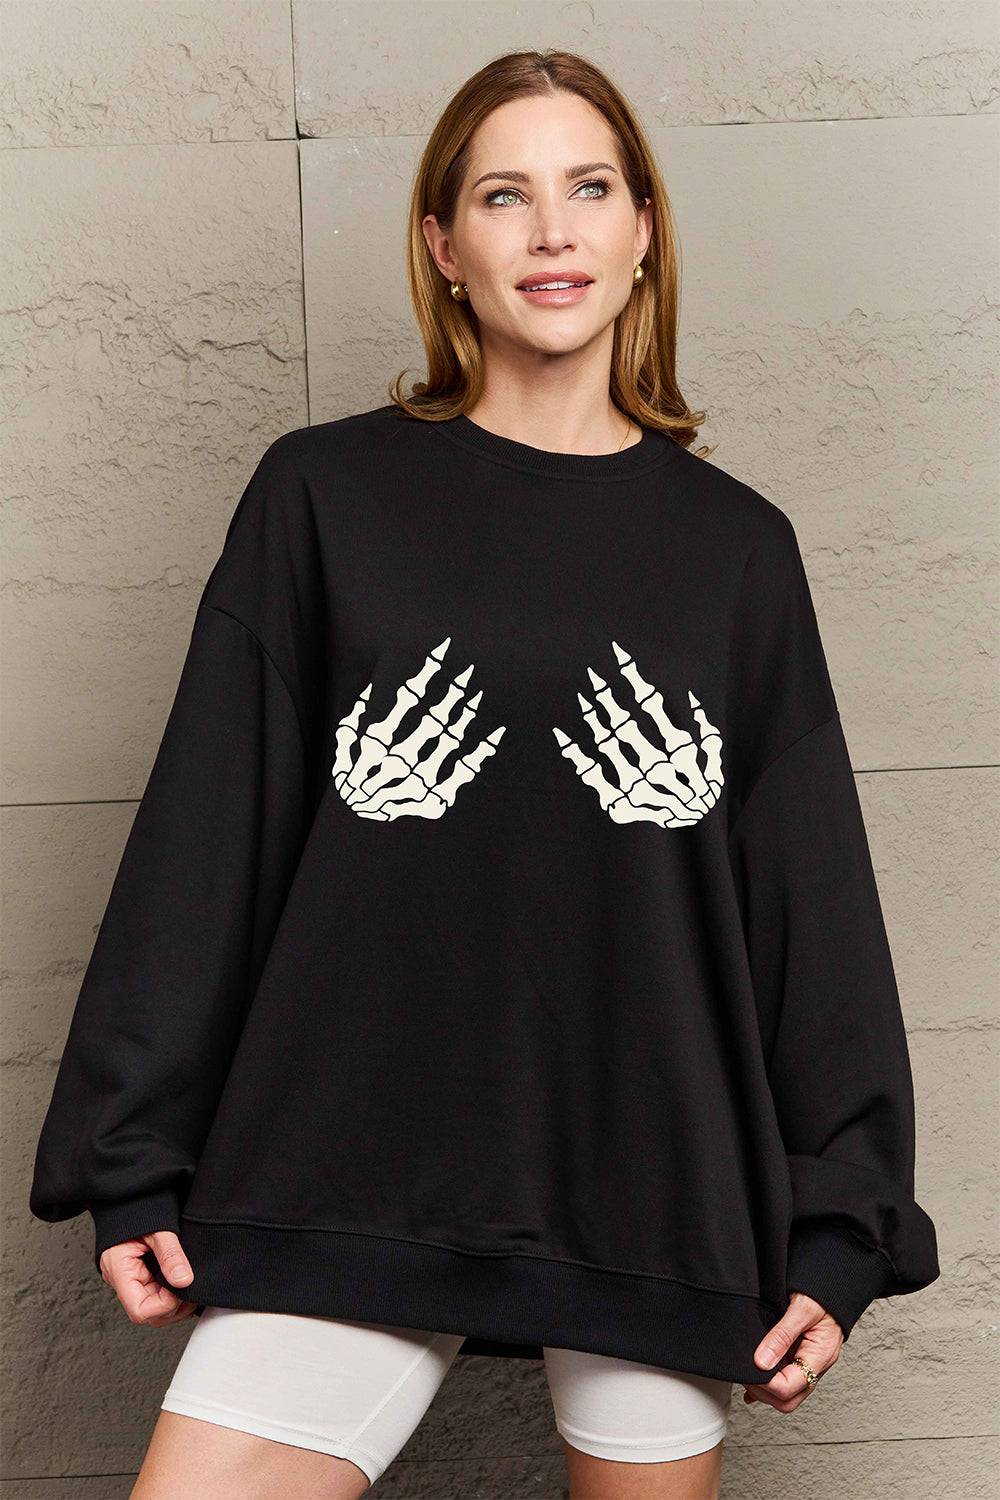 Simply Love Full Size Skeleton Hand Drop Shoulder Sweatshirt